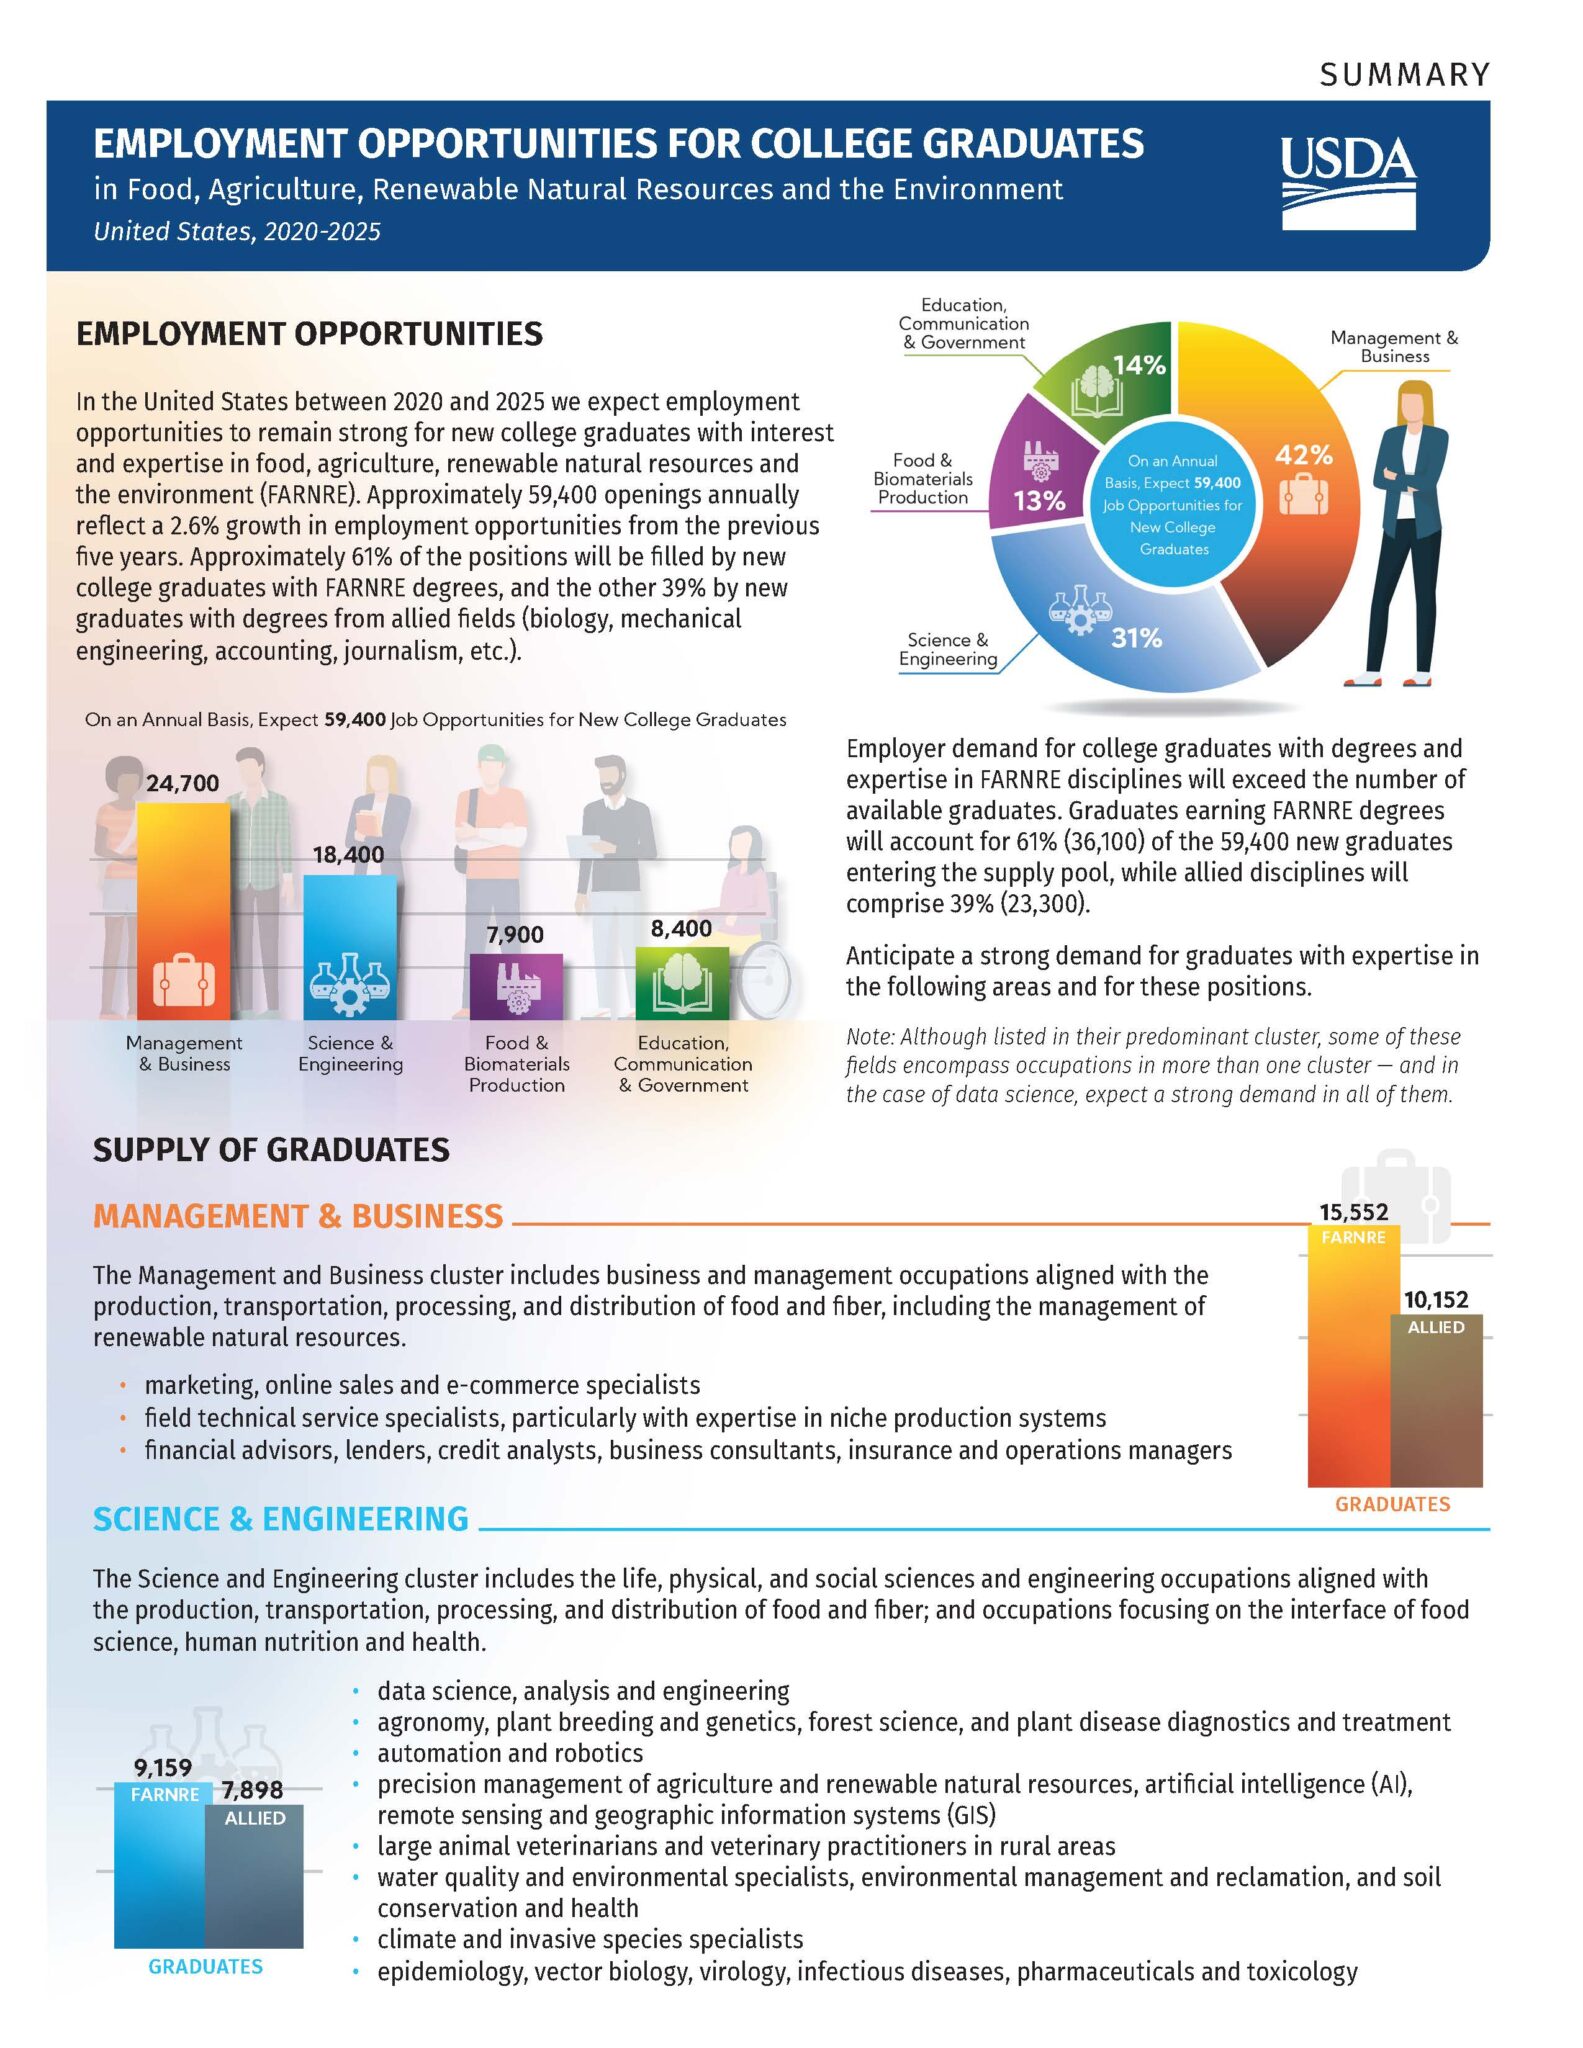 Report Summary, 20202025 USDA 20202025 Employment Opportunities